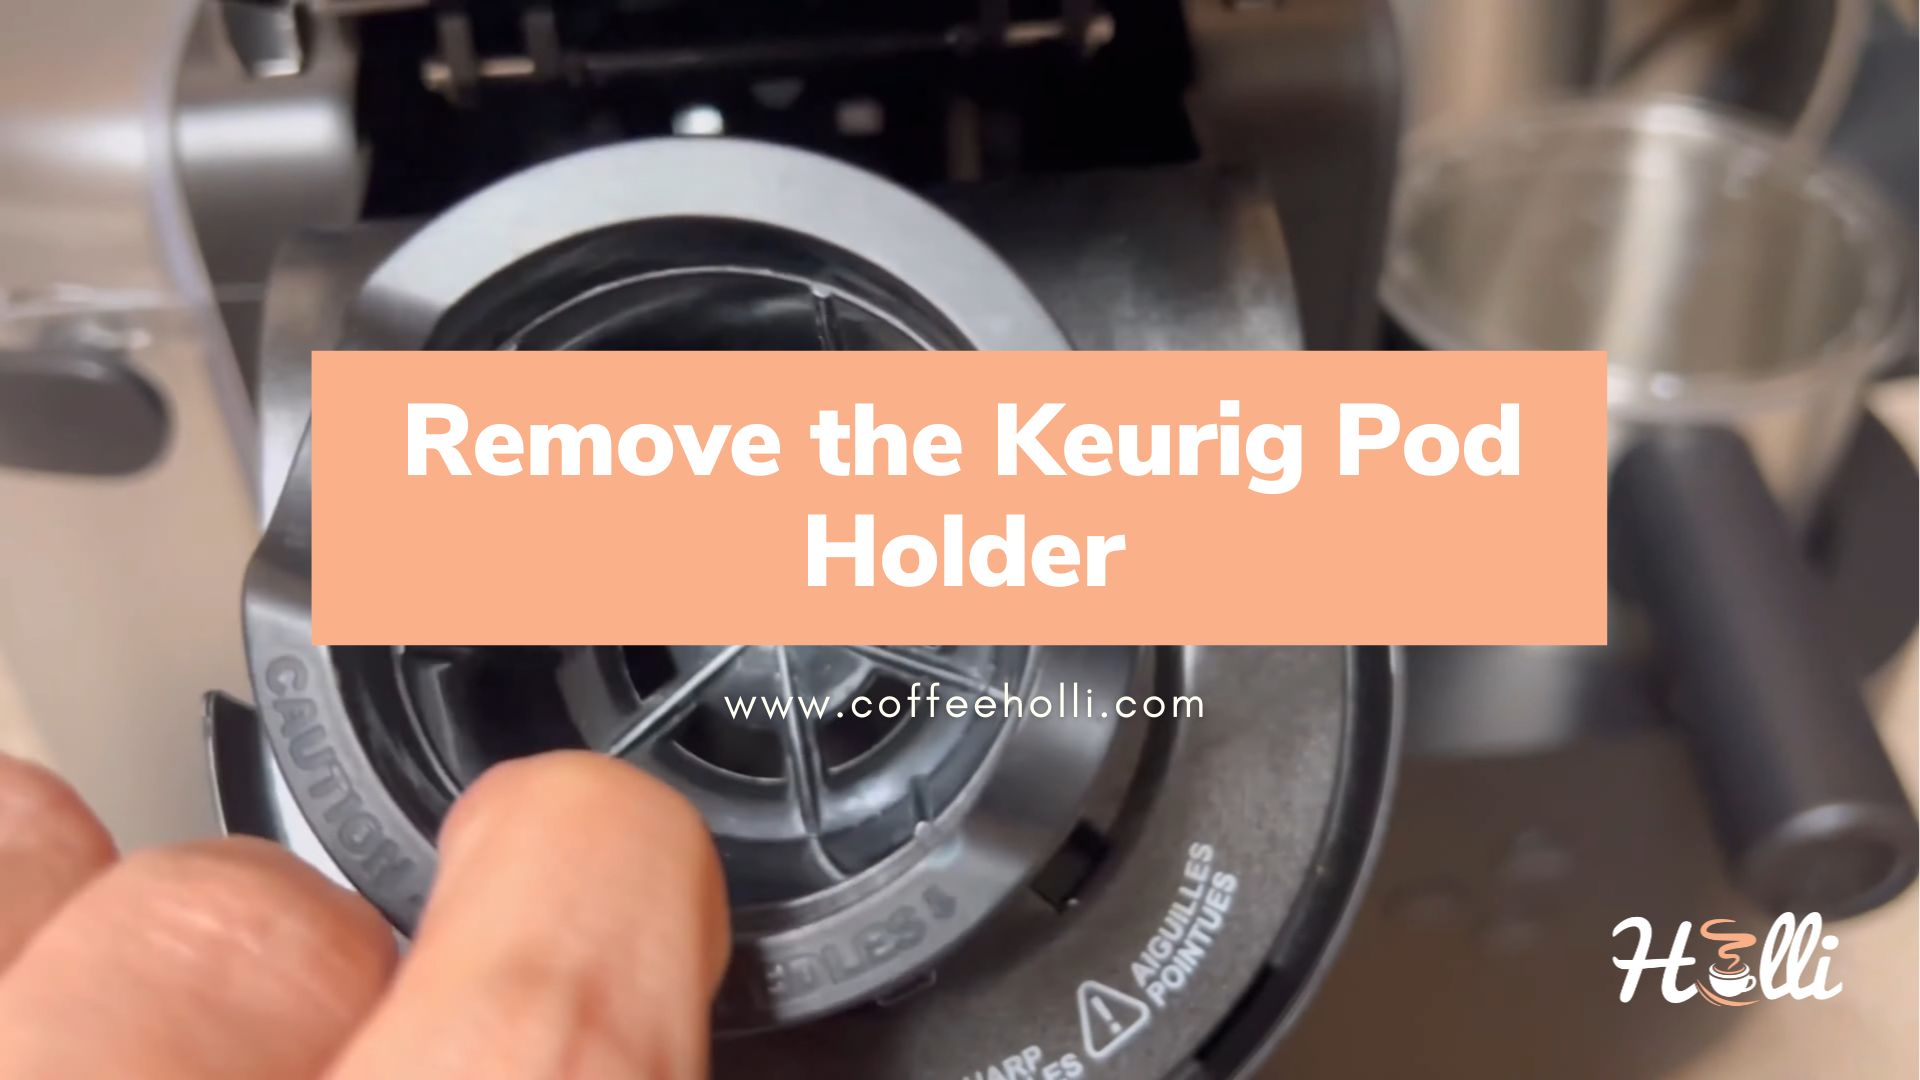 Remove the Keurig Pod Holder